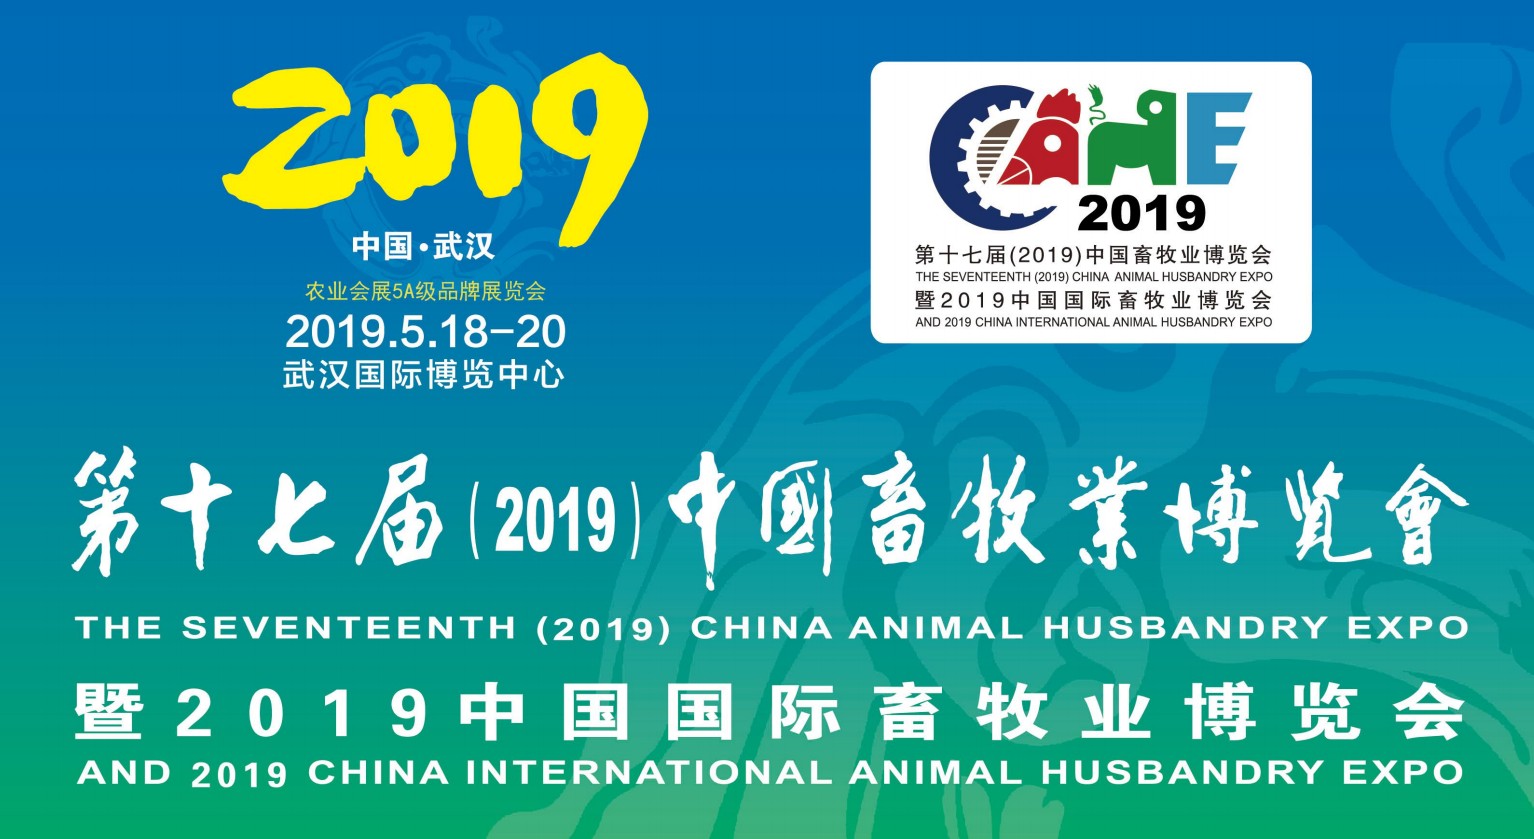 2019.5.18-5.20 China Animal Husbandry Expo in Wuhan!